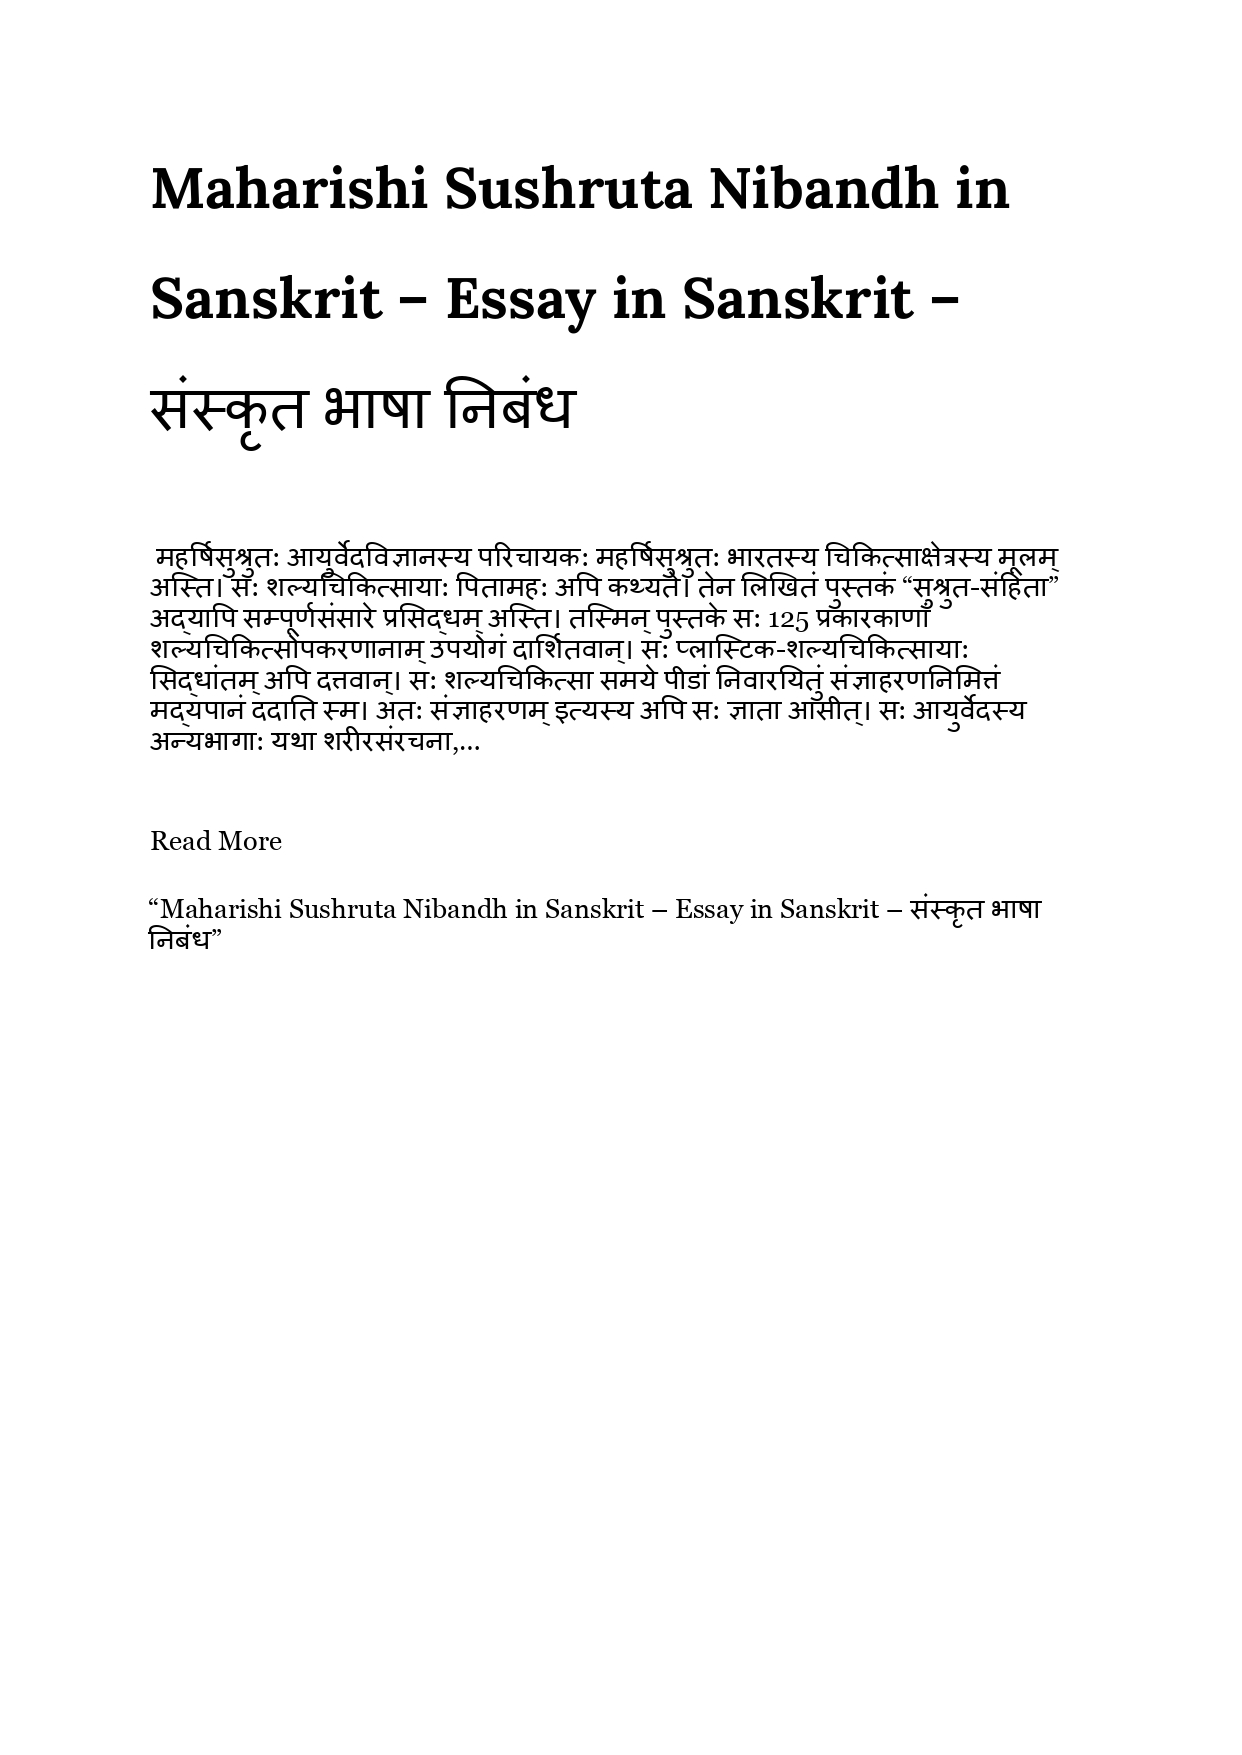 Maharishi Sushruta Nibandh in Sanskrit - Essay in Sanskrit - संस्कृत ...